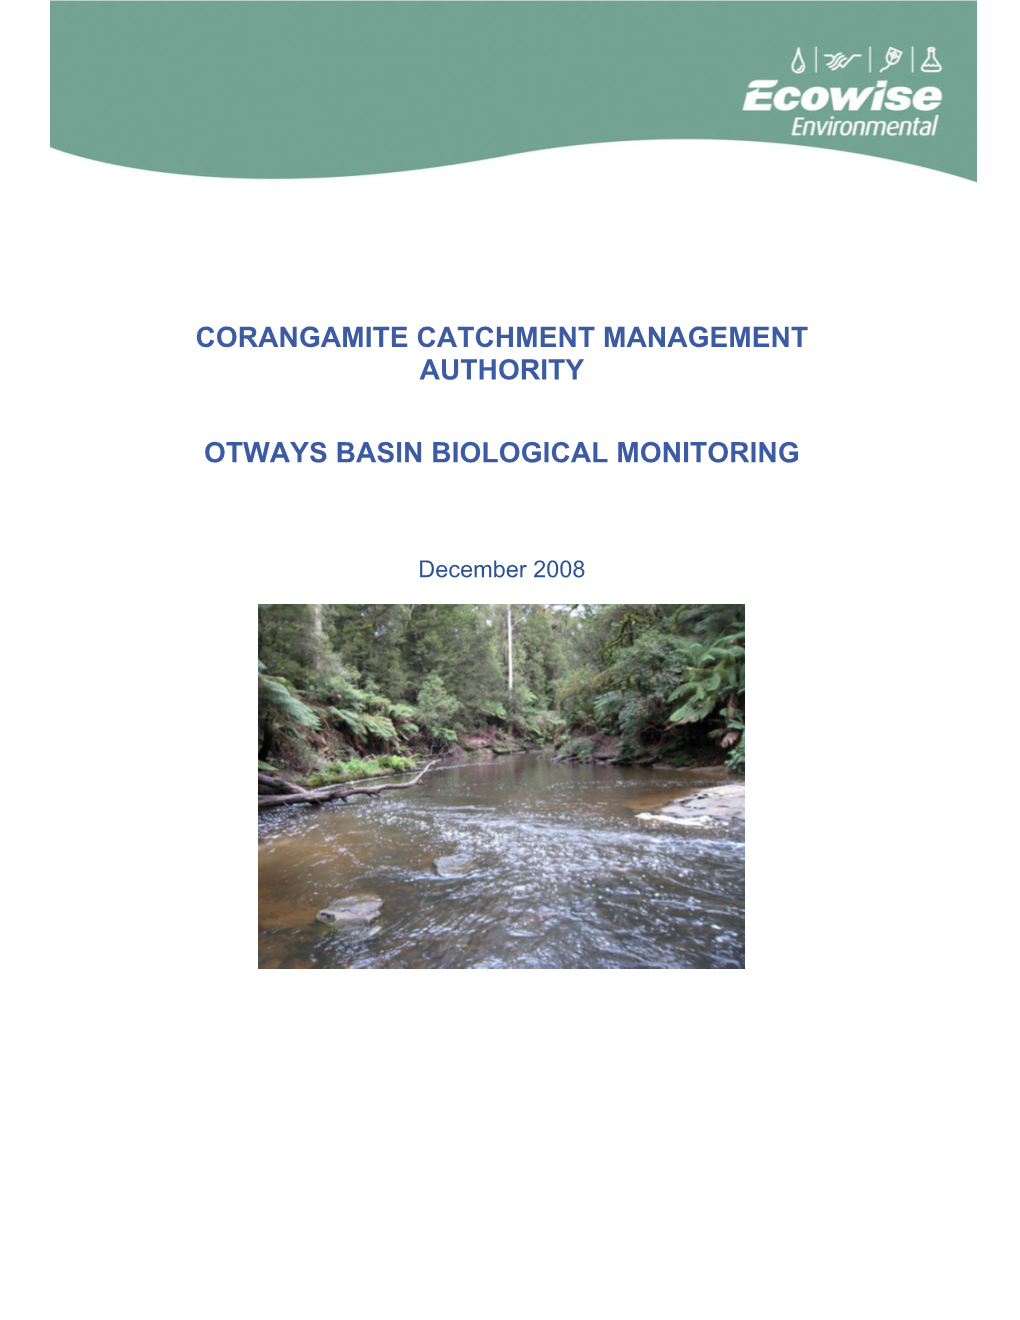 Corangamite Catchment Management Authority Otways Basin Biological Monitoring